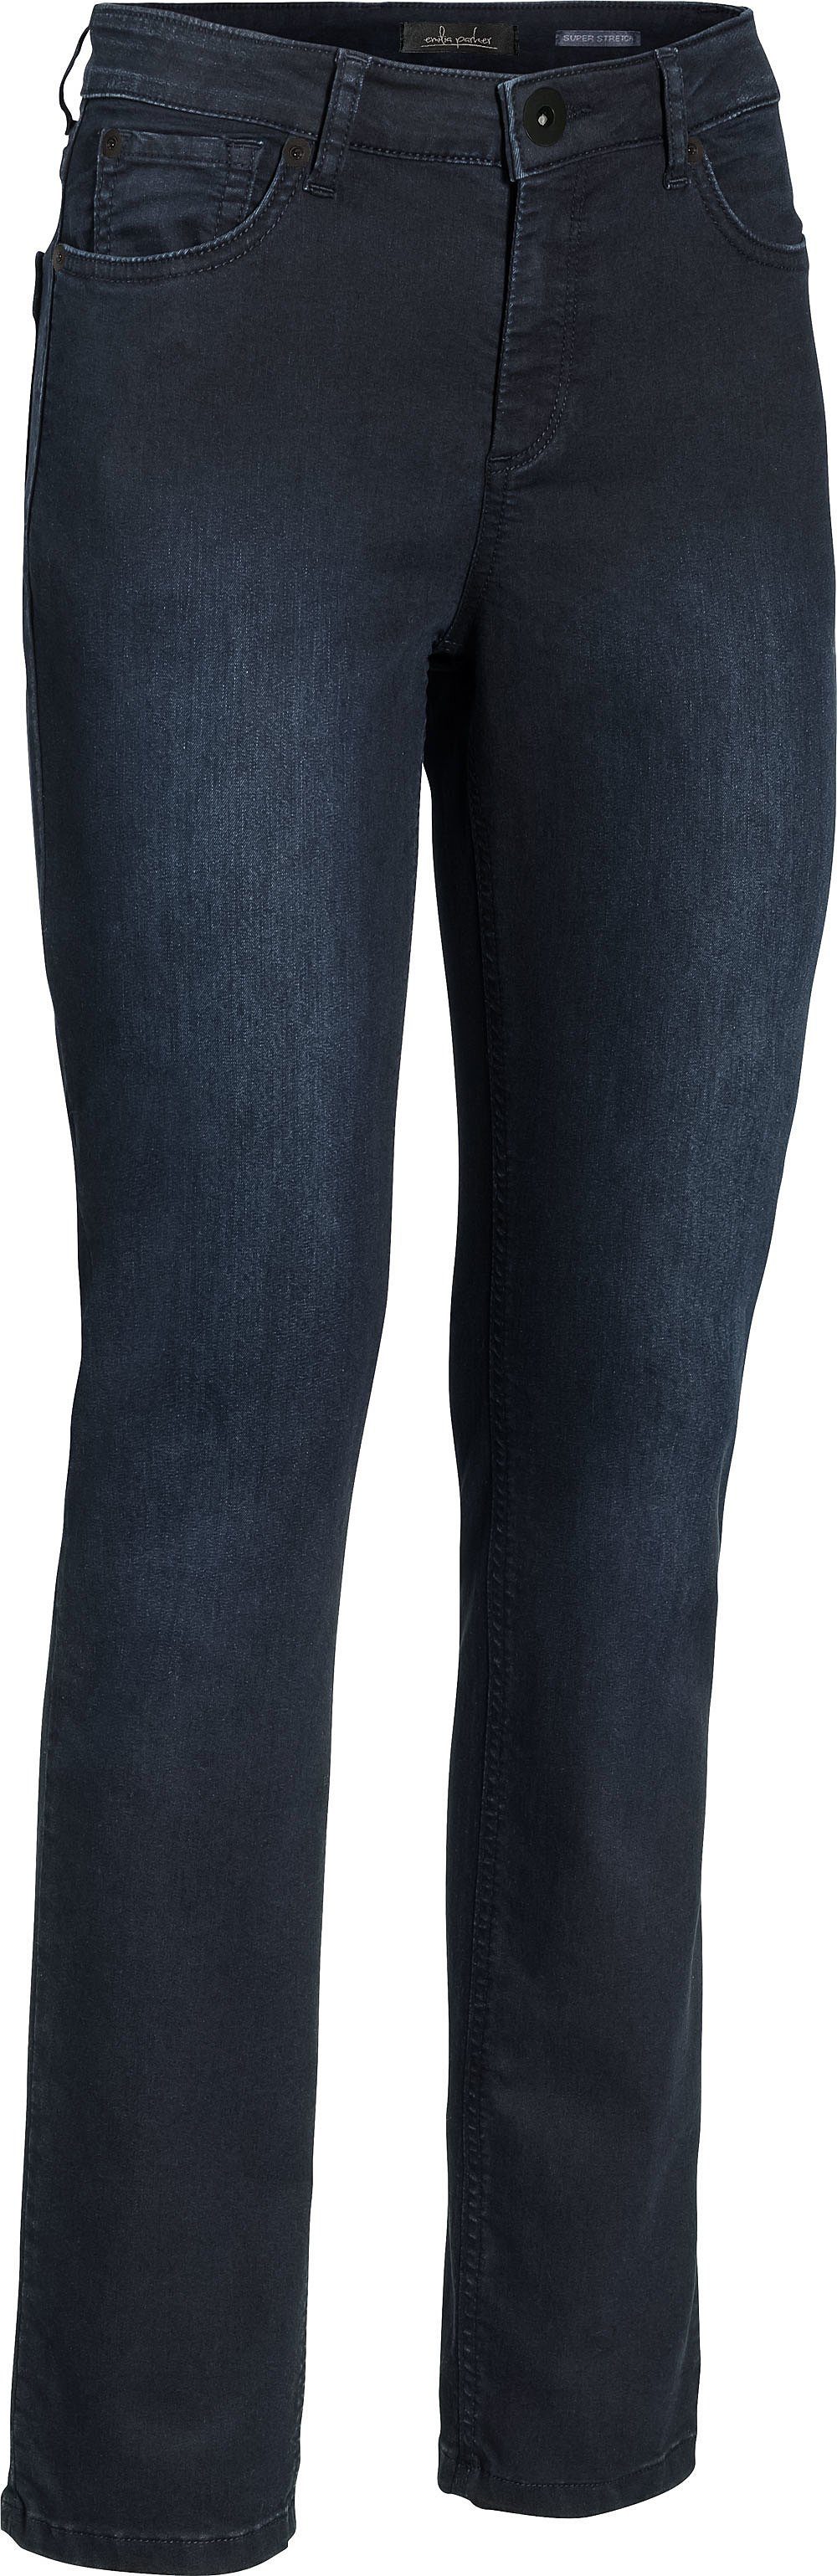 Emilia Parker Stretch-Hose ultrabequeme Jeans mit knackigem Sitz dunkelblau